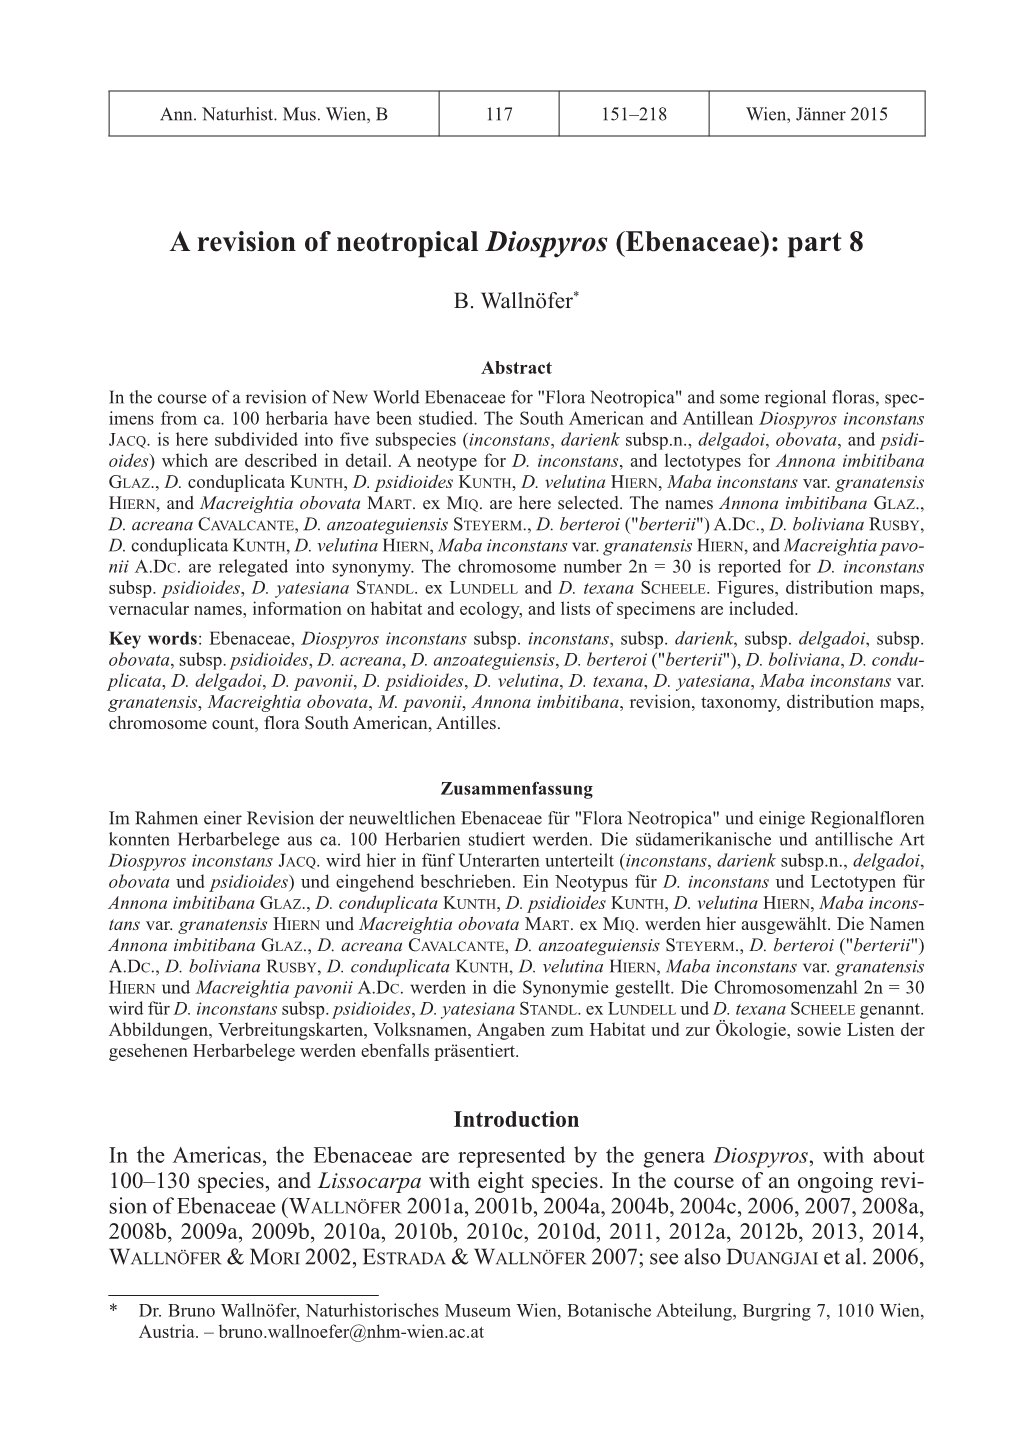 A Revision of Neotropical Diospyros (Ebenaceae): Part 8